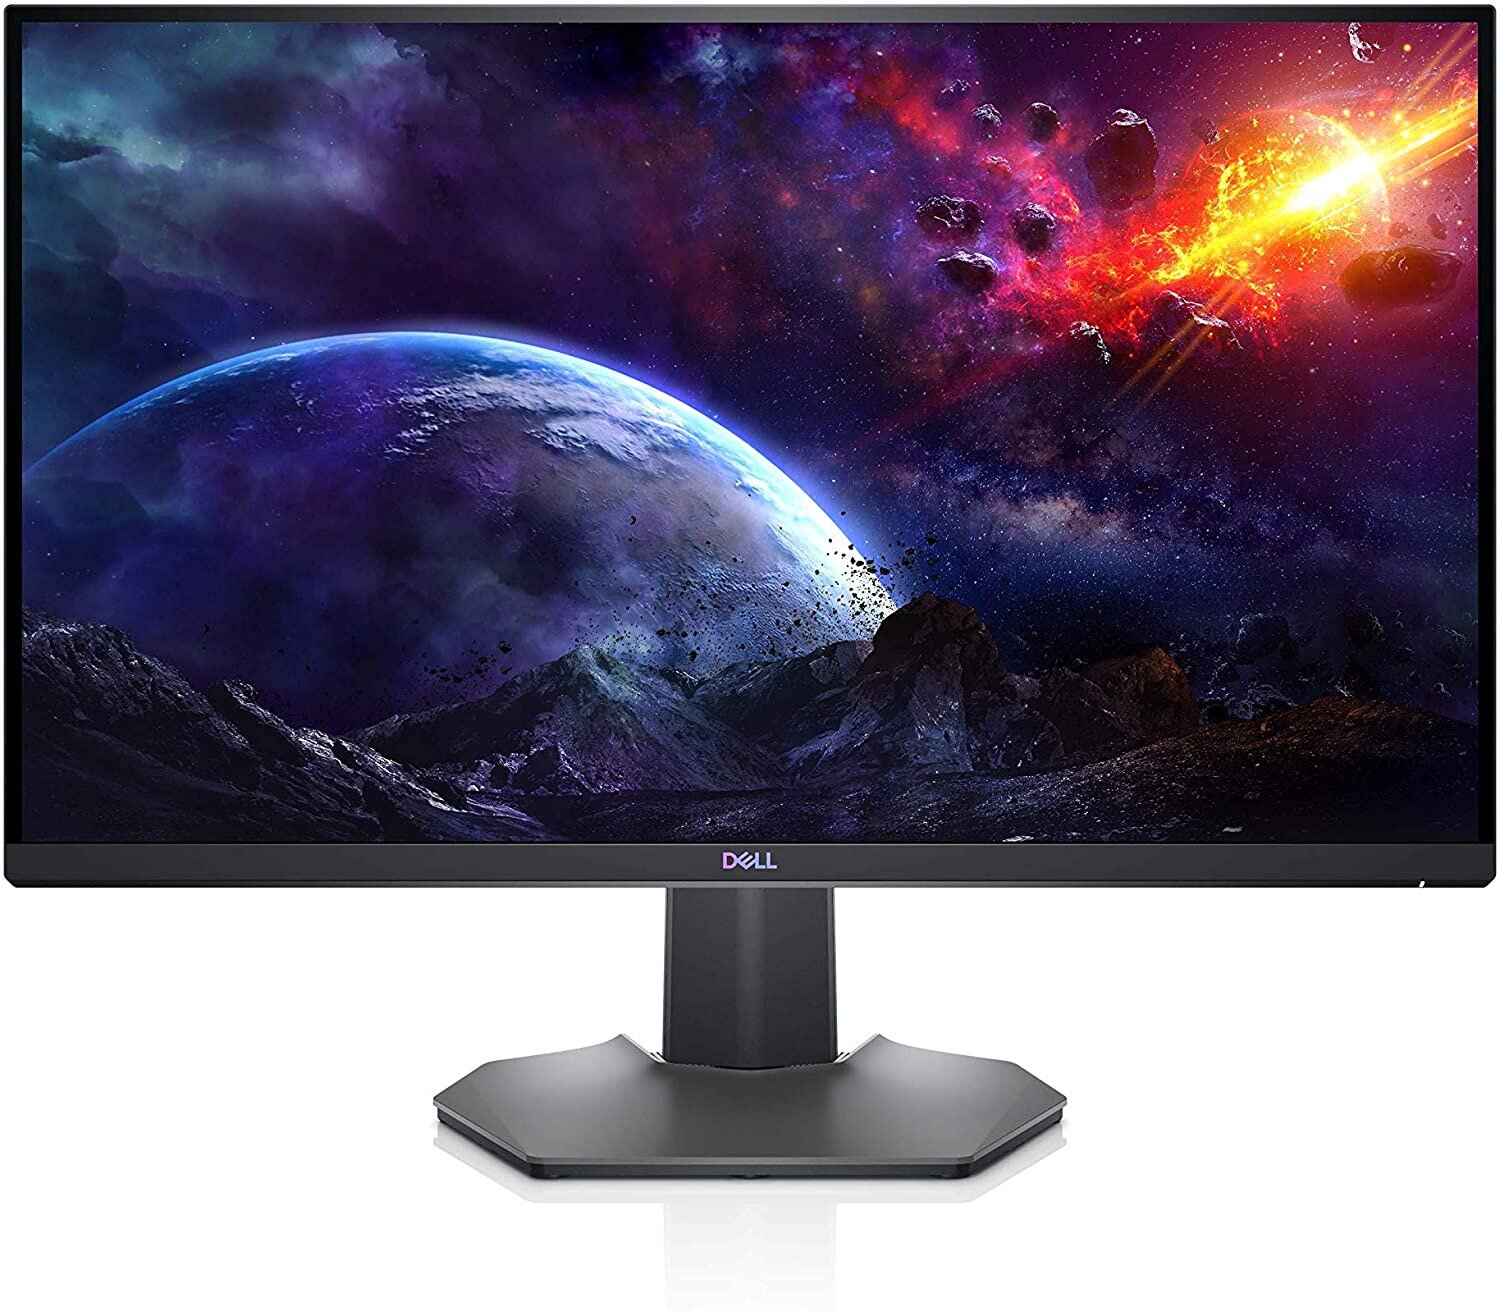 buy-dell-27-led-backlit-lcd-gaming-monitor-s2721dgf-online-in-uae